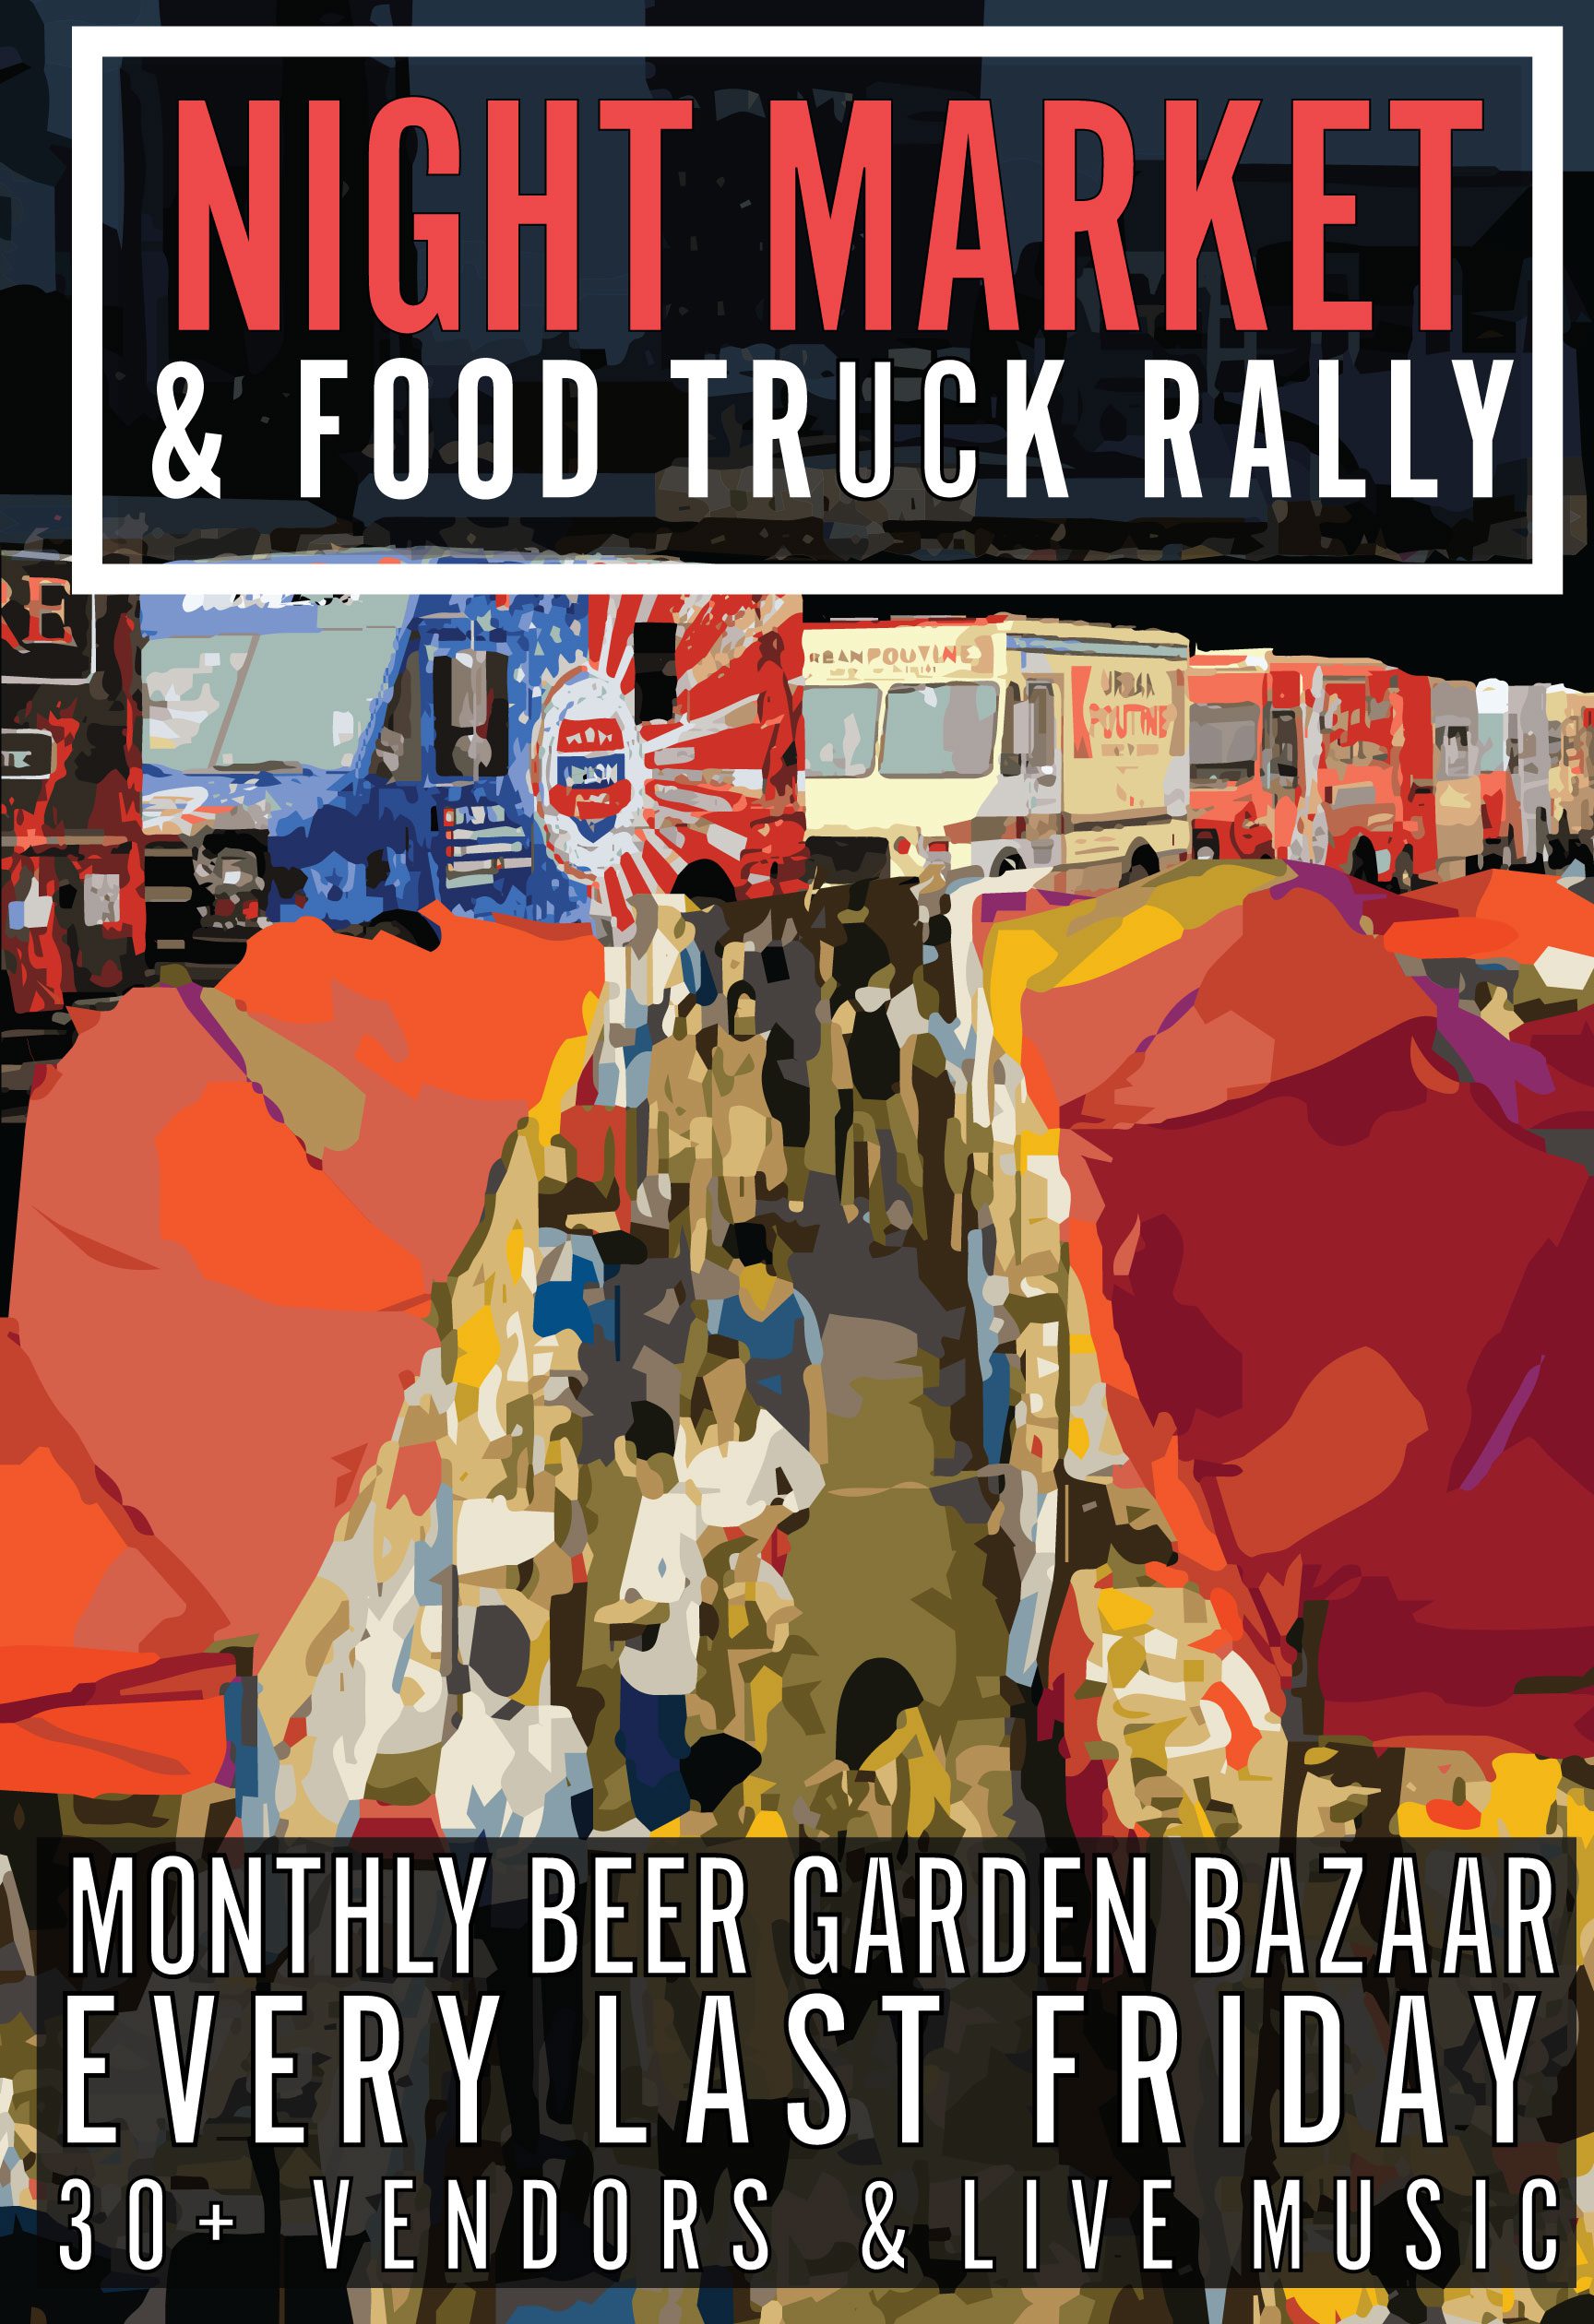 Motorworks Brewing presents Monthly Beer Garden Bazaar - Night Market & Food Truck Rally every last Friday of the month.